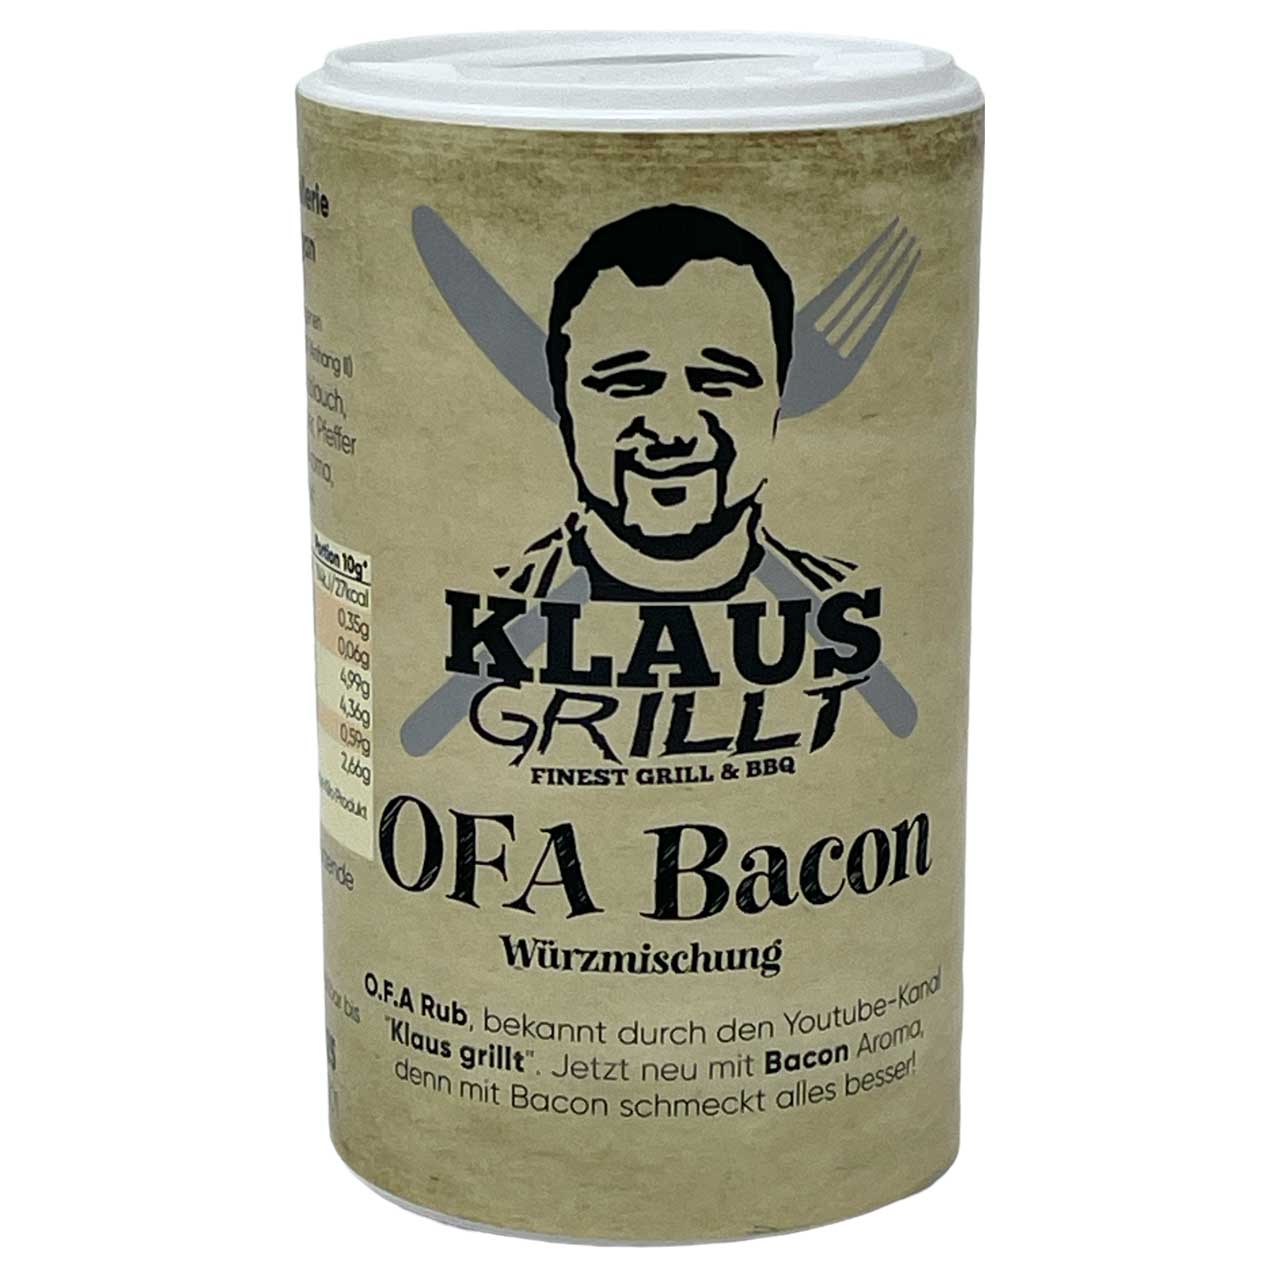 Klaus Grillt OFA Bacon, 100 g Streuer